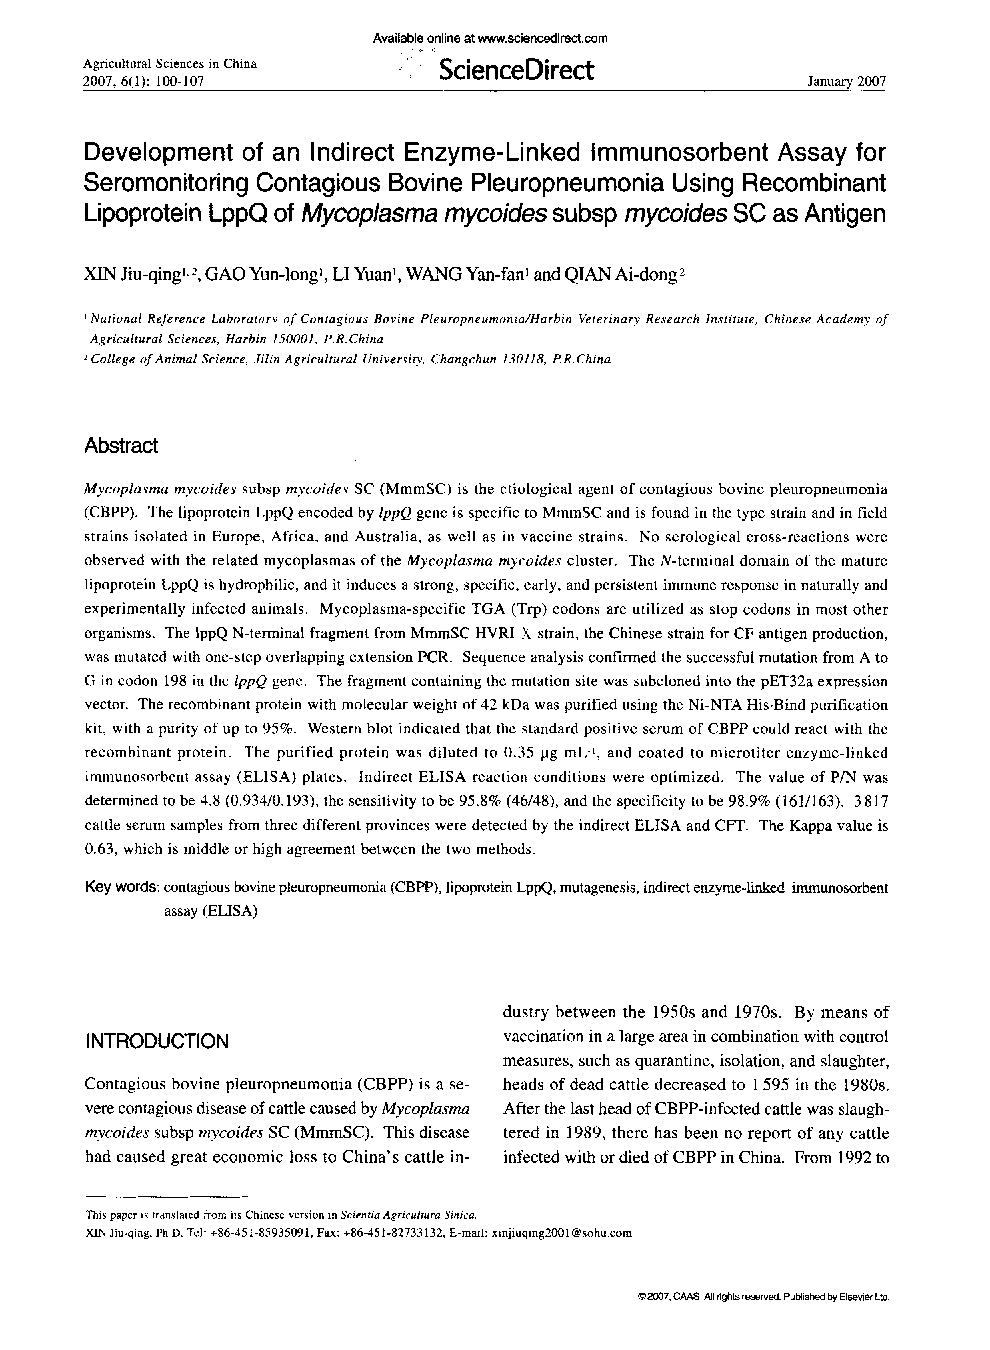 Development of an Indirect Enzyme-Linked Immunosorbent Assay for Seromonitoring Contagious Bovine Pleuropneumonia Using Recombinant Lipoprotein LppQ of Mycoplasma mycoides subsp mycoides SC as Antigen 